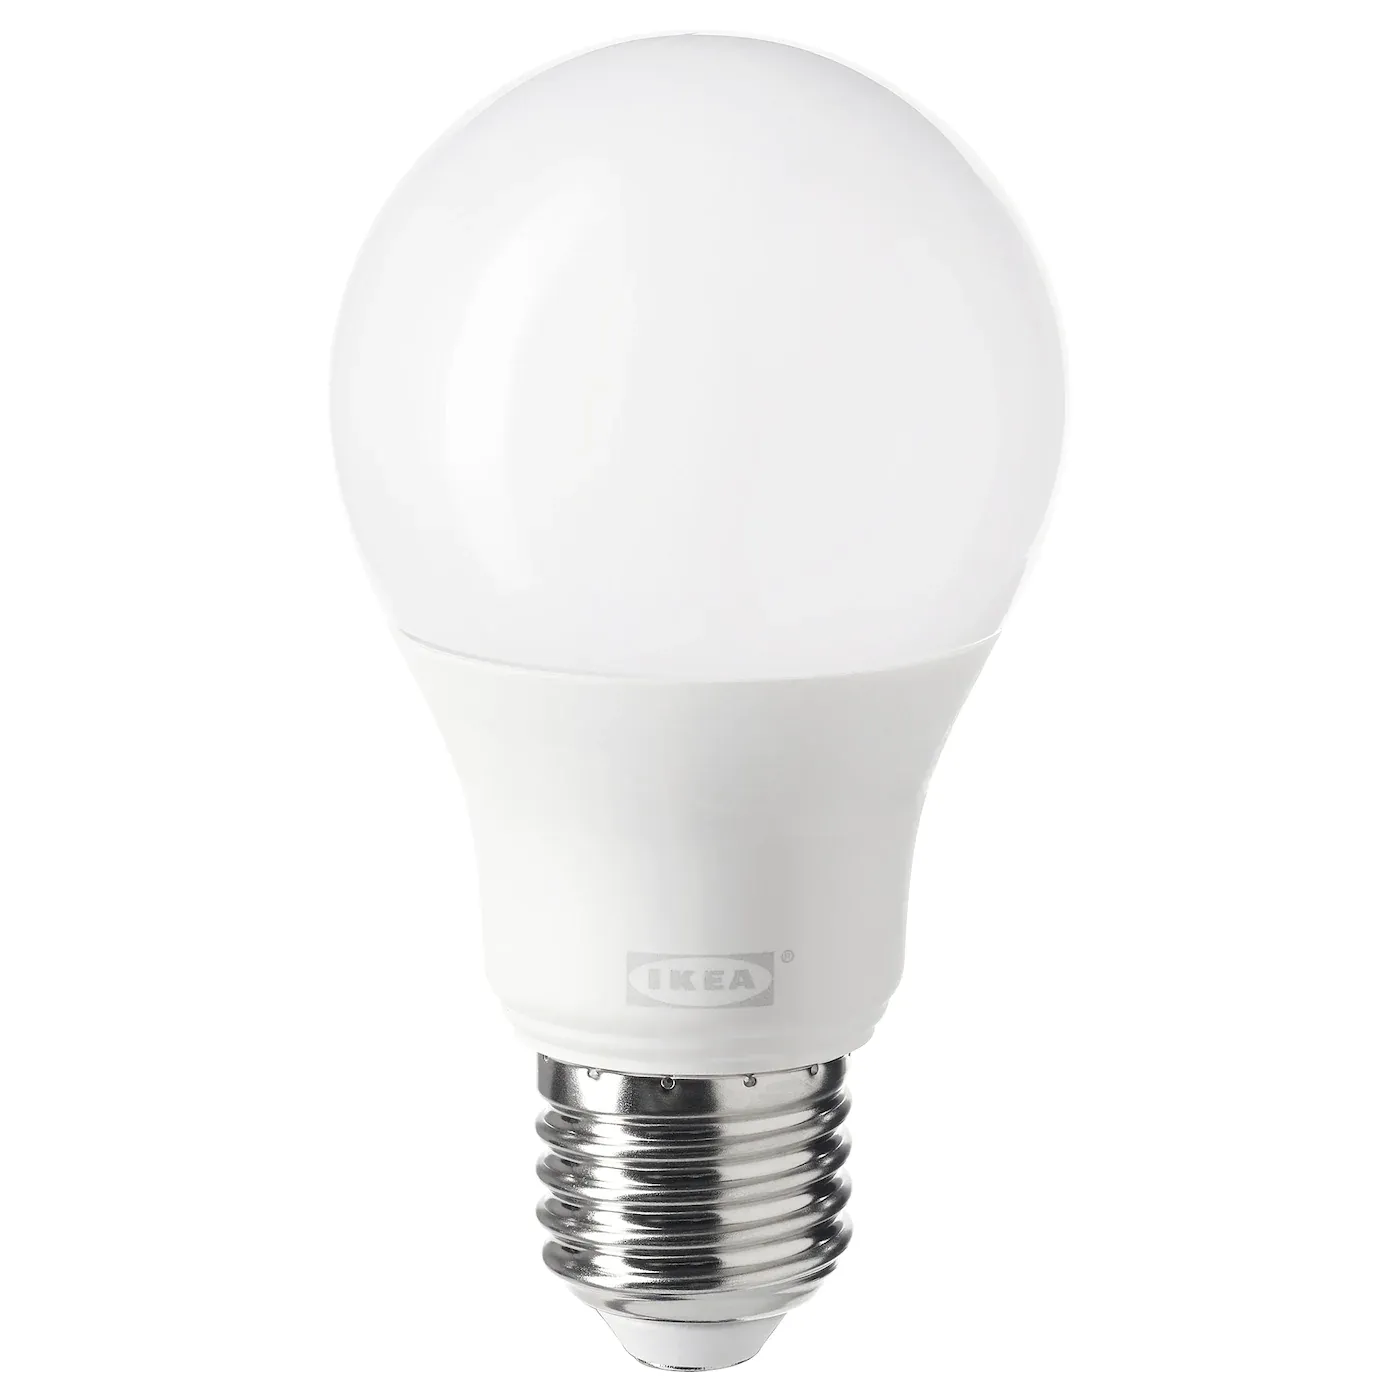 Tradfri LED bulb E27 806 lumen, dimmable, warm white